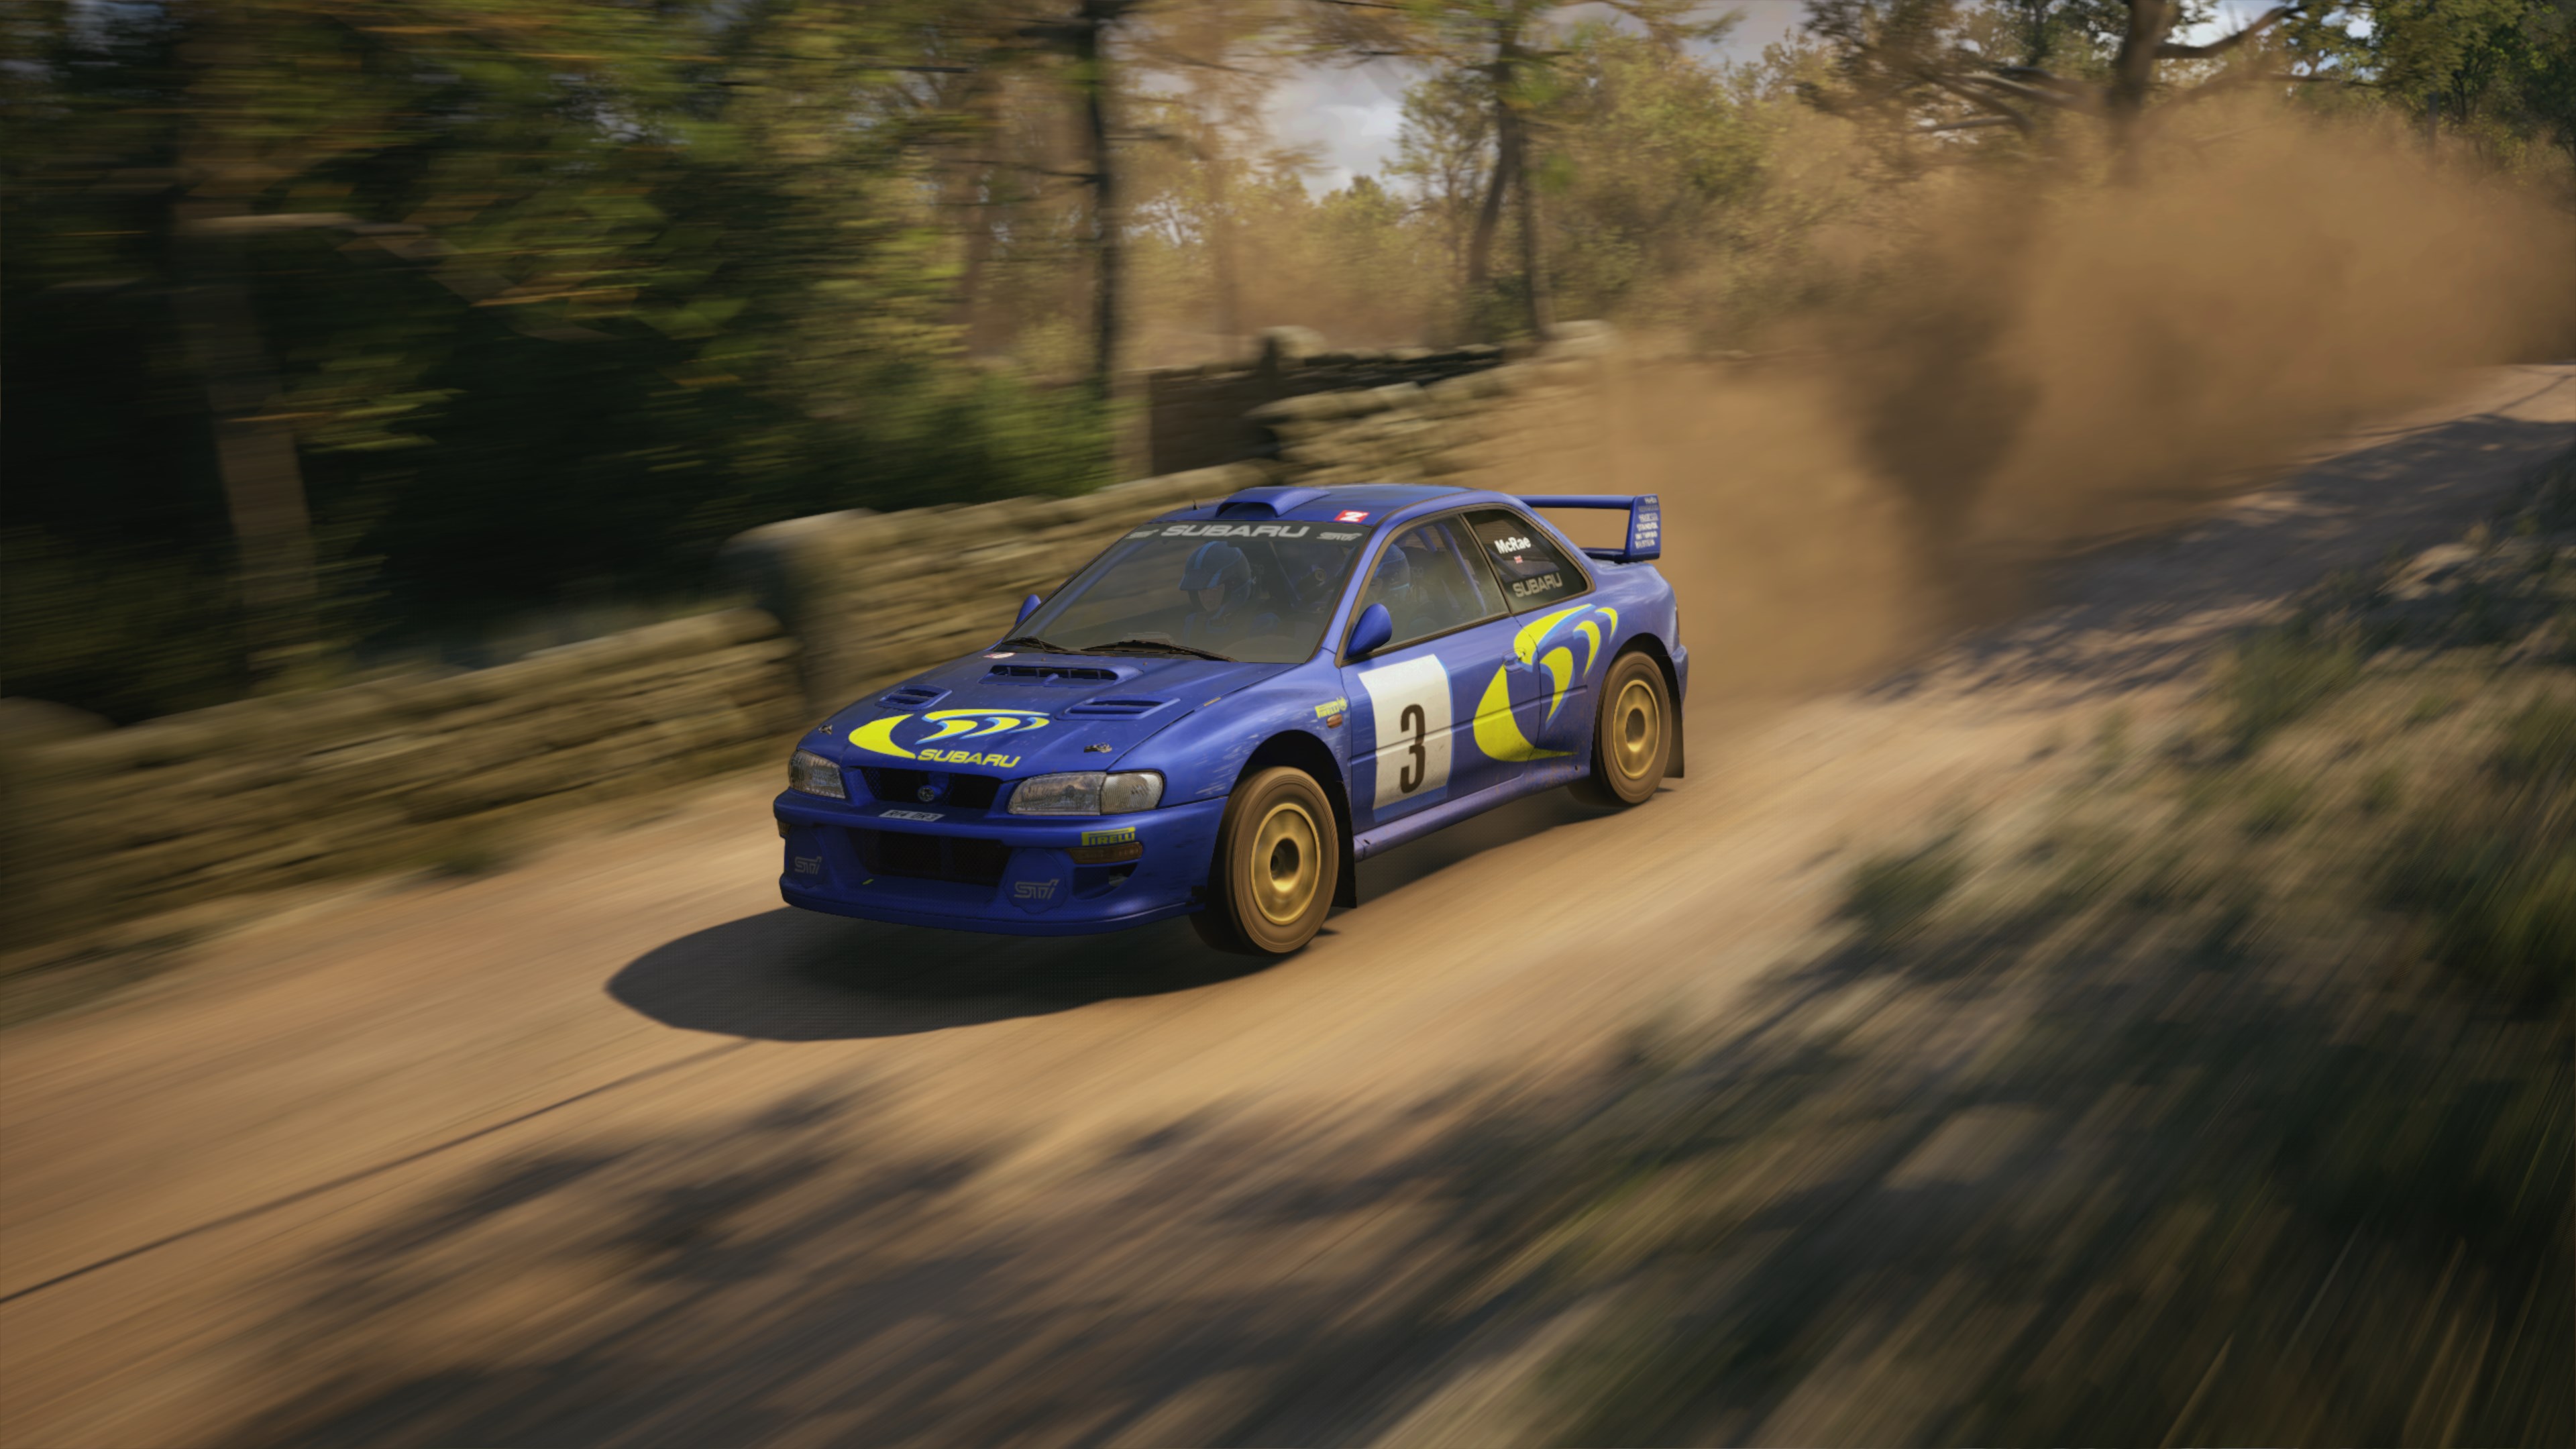 EA Sports WRC 23 Origin CD Key